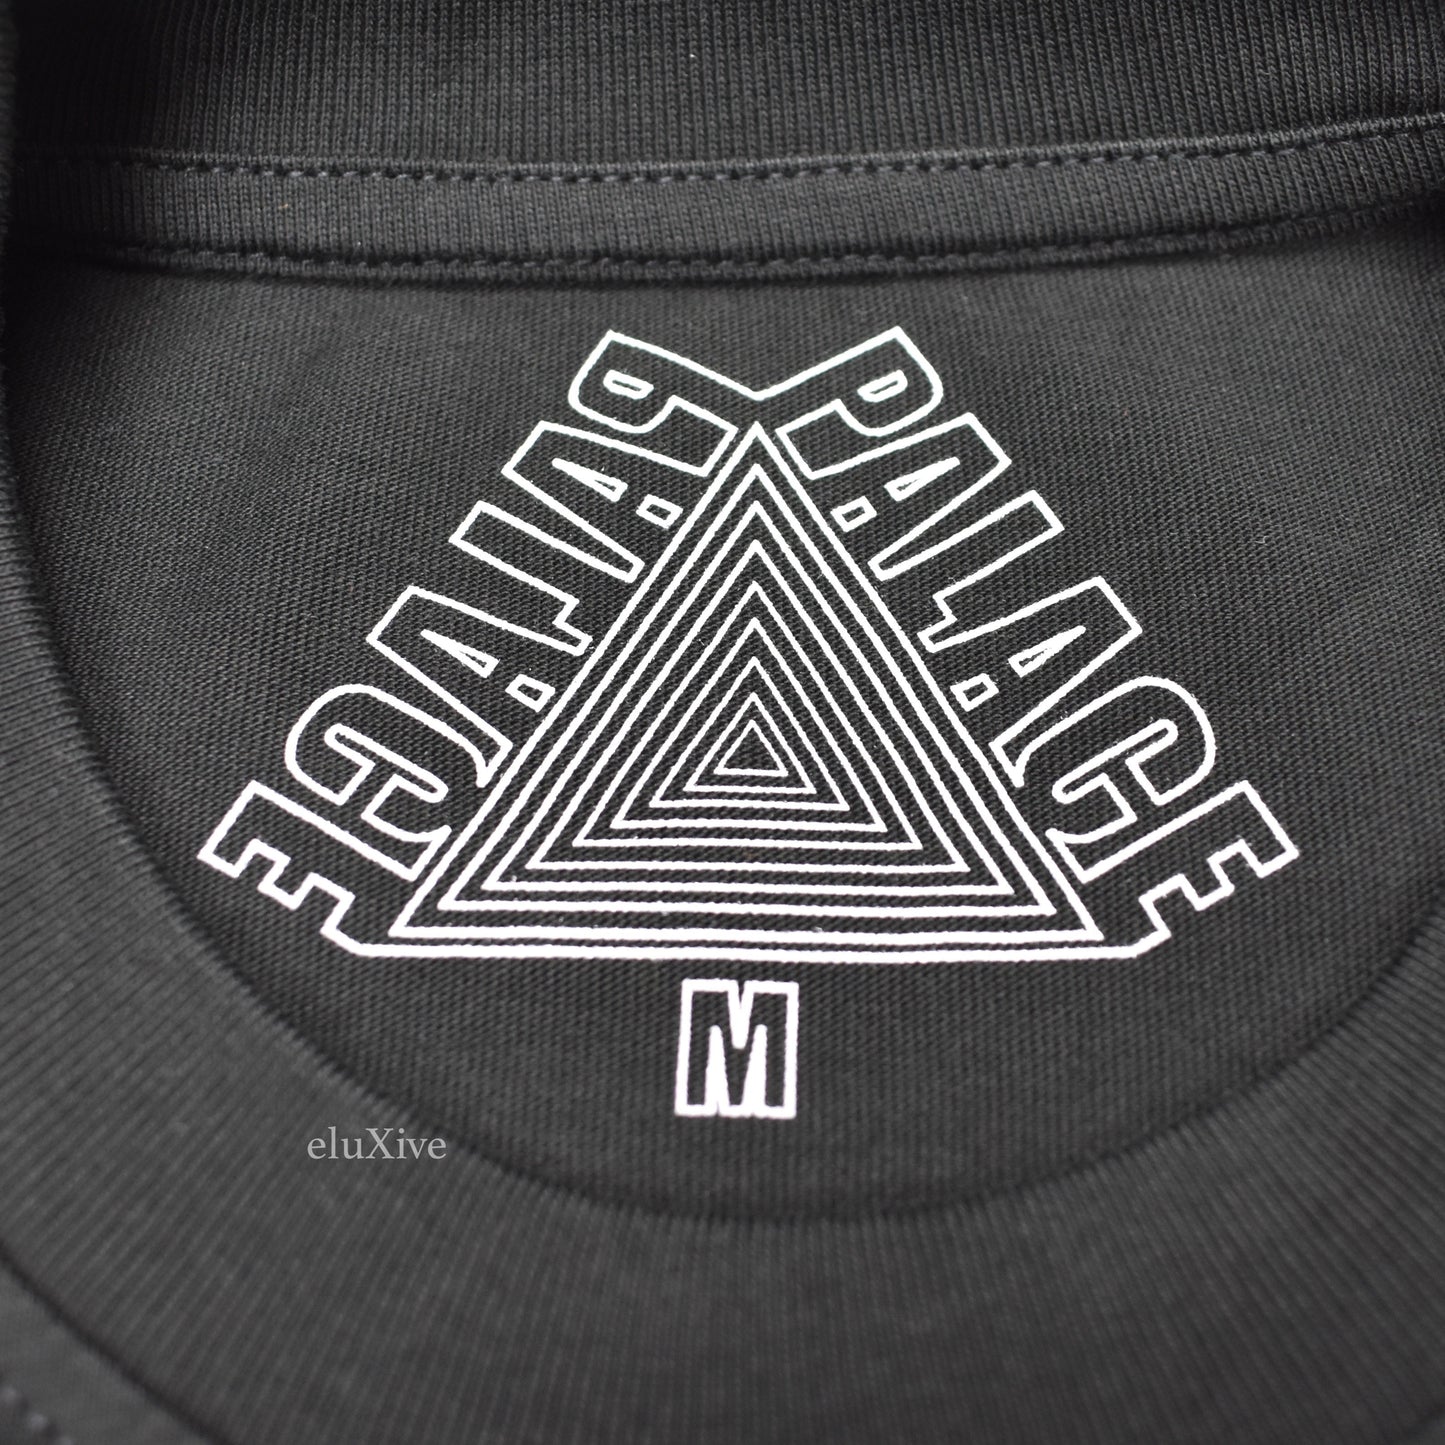 Palace - Mad Maximum Tri-Ferg Logo T-Shirt (Black)